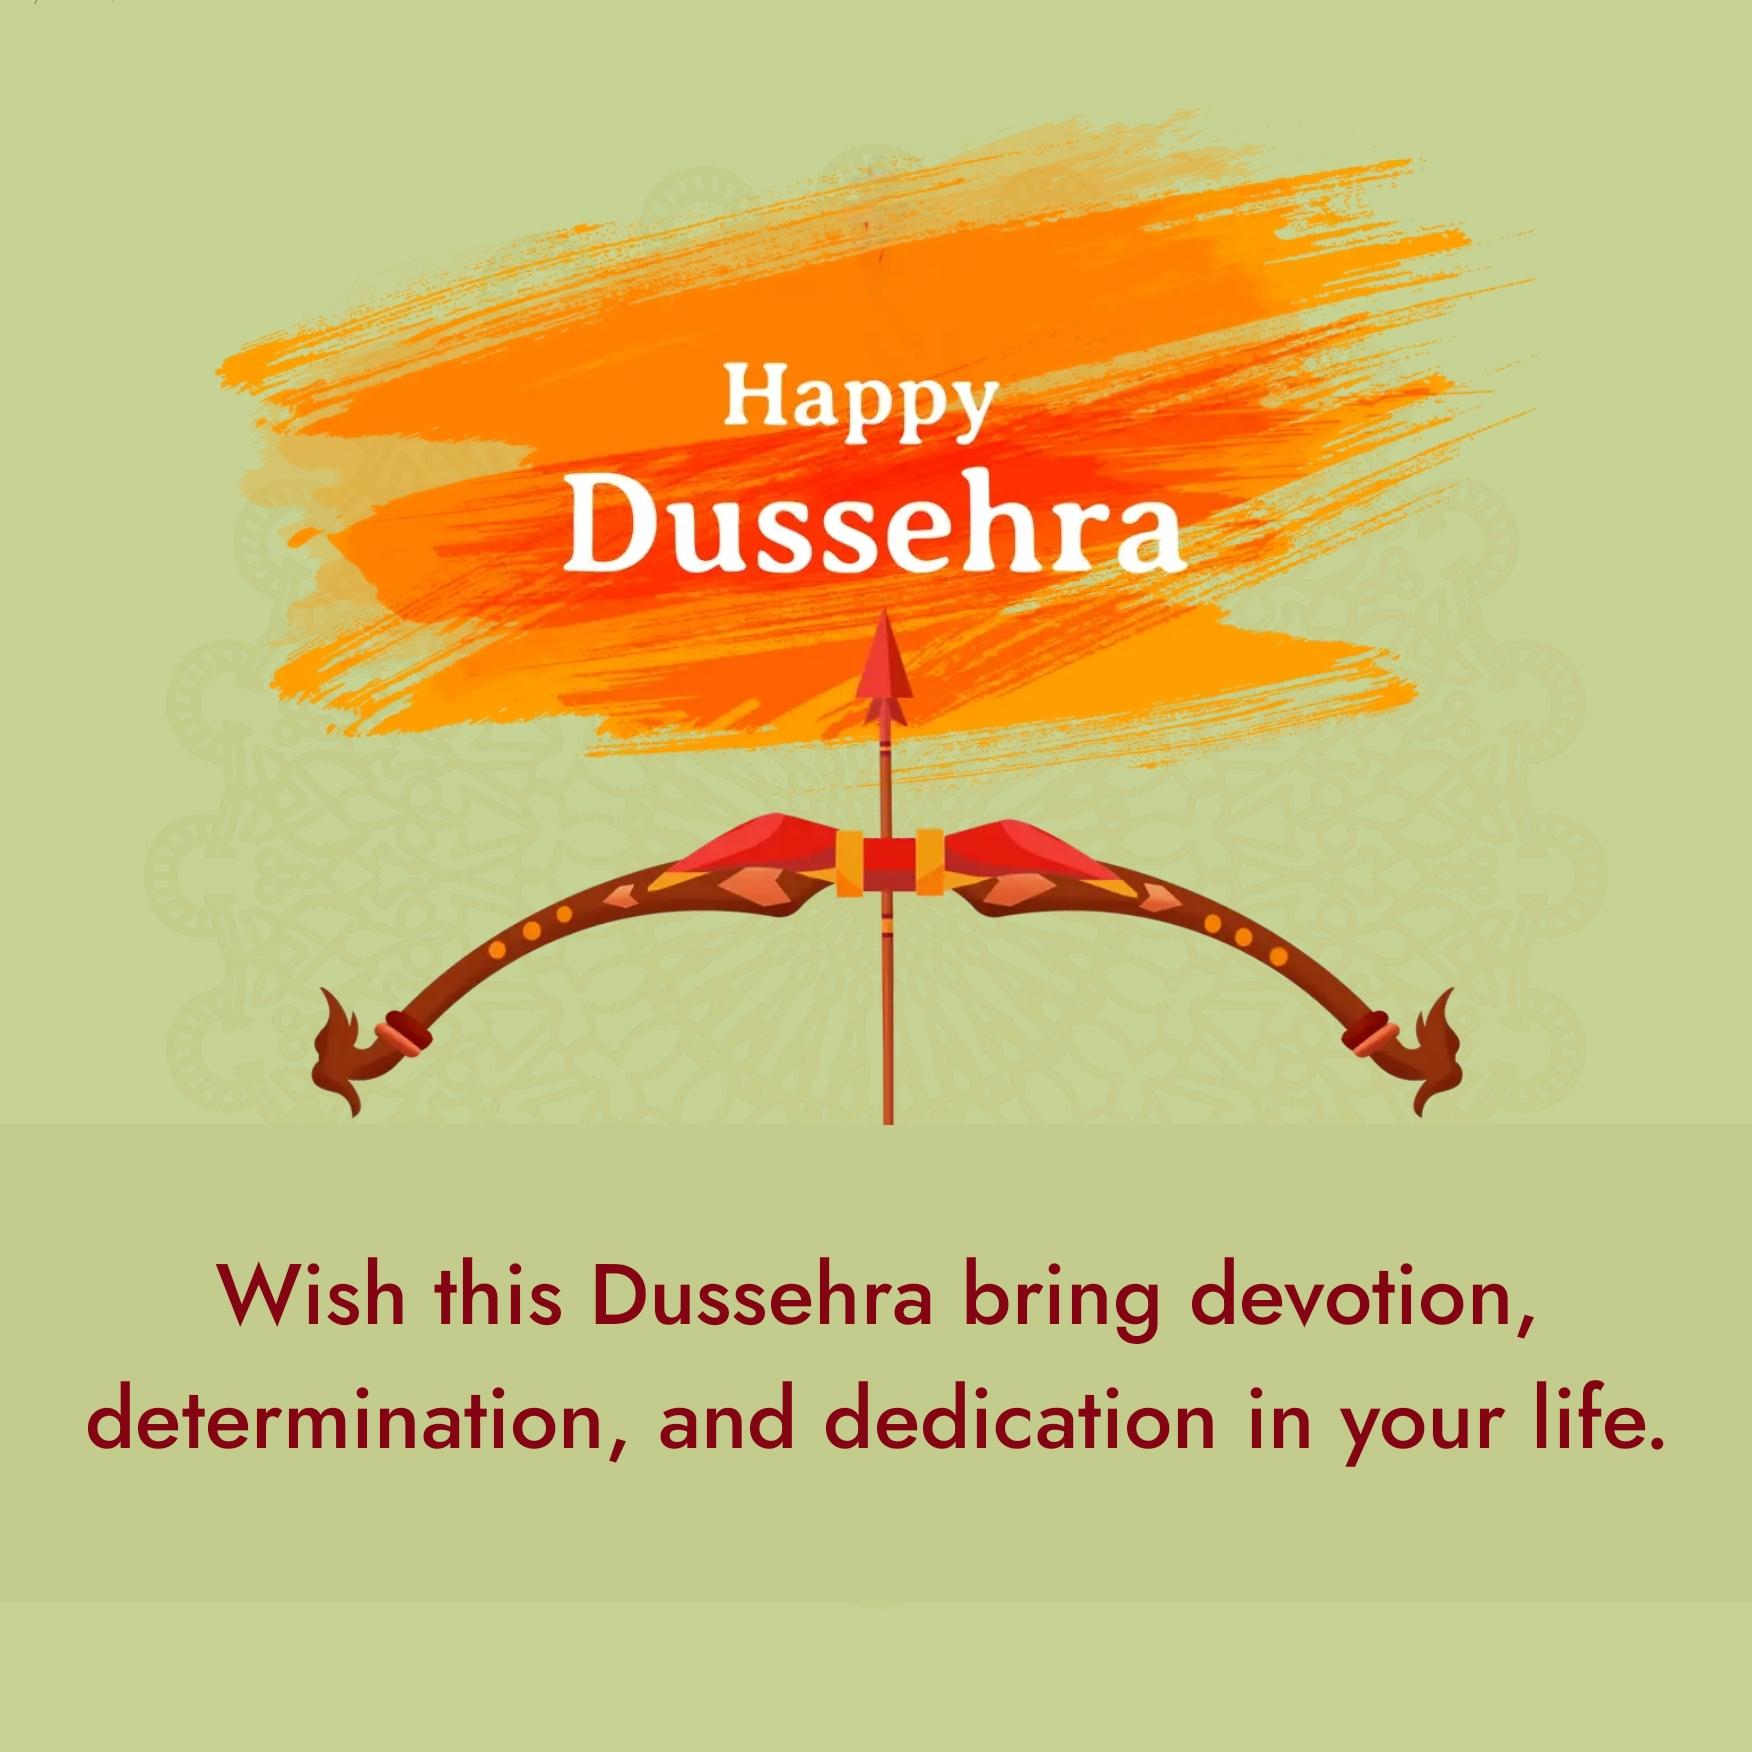 Wish this Dussehra bring devotion determination and dedication